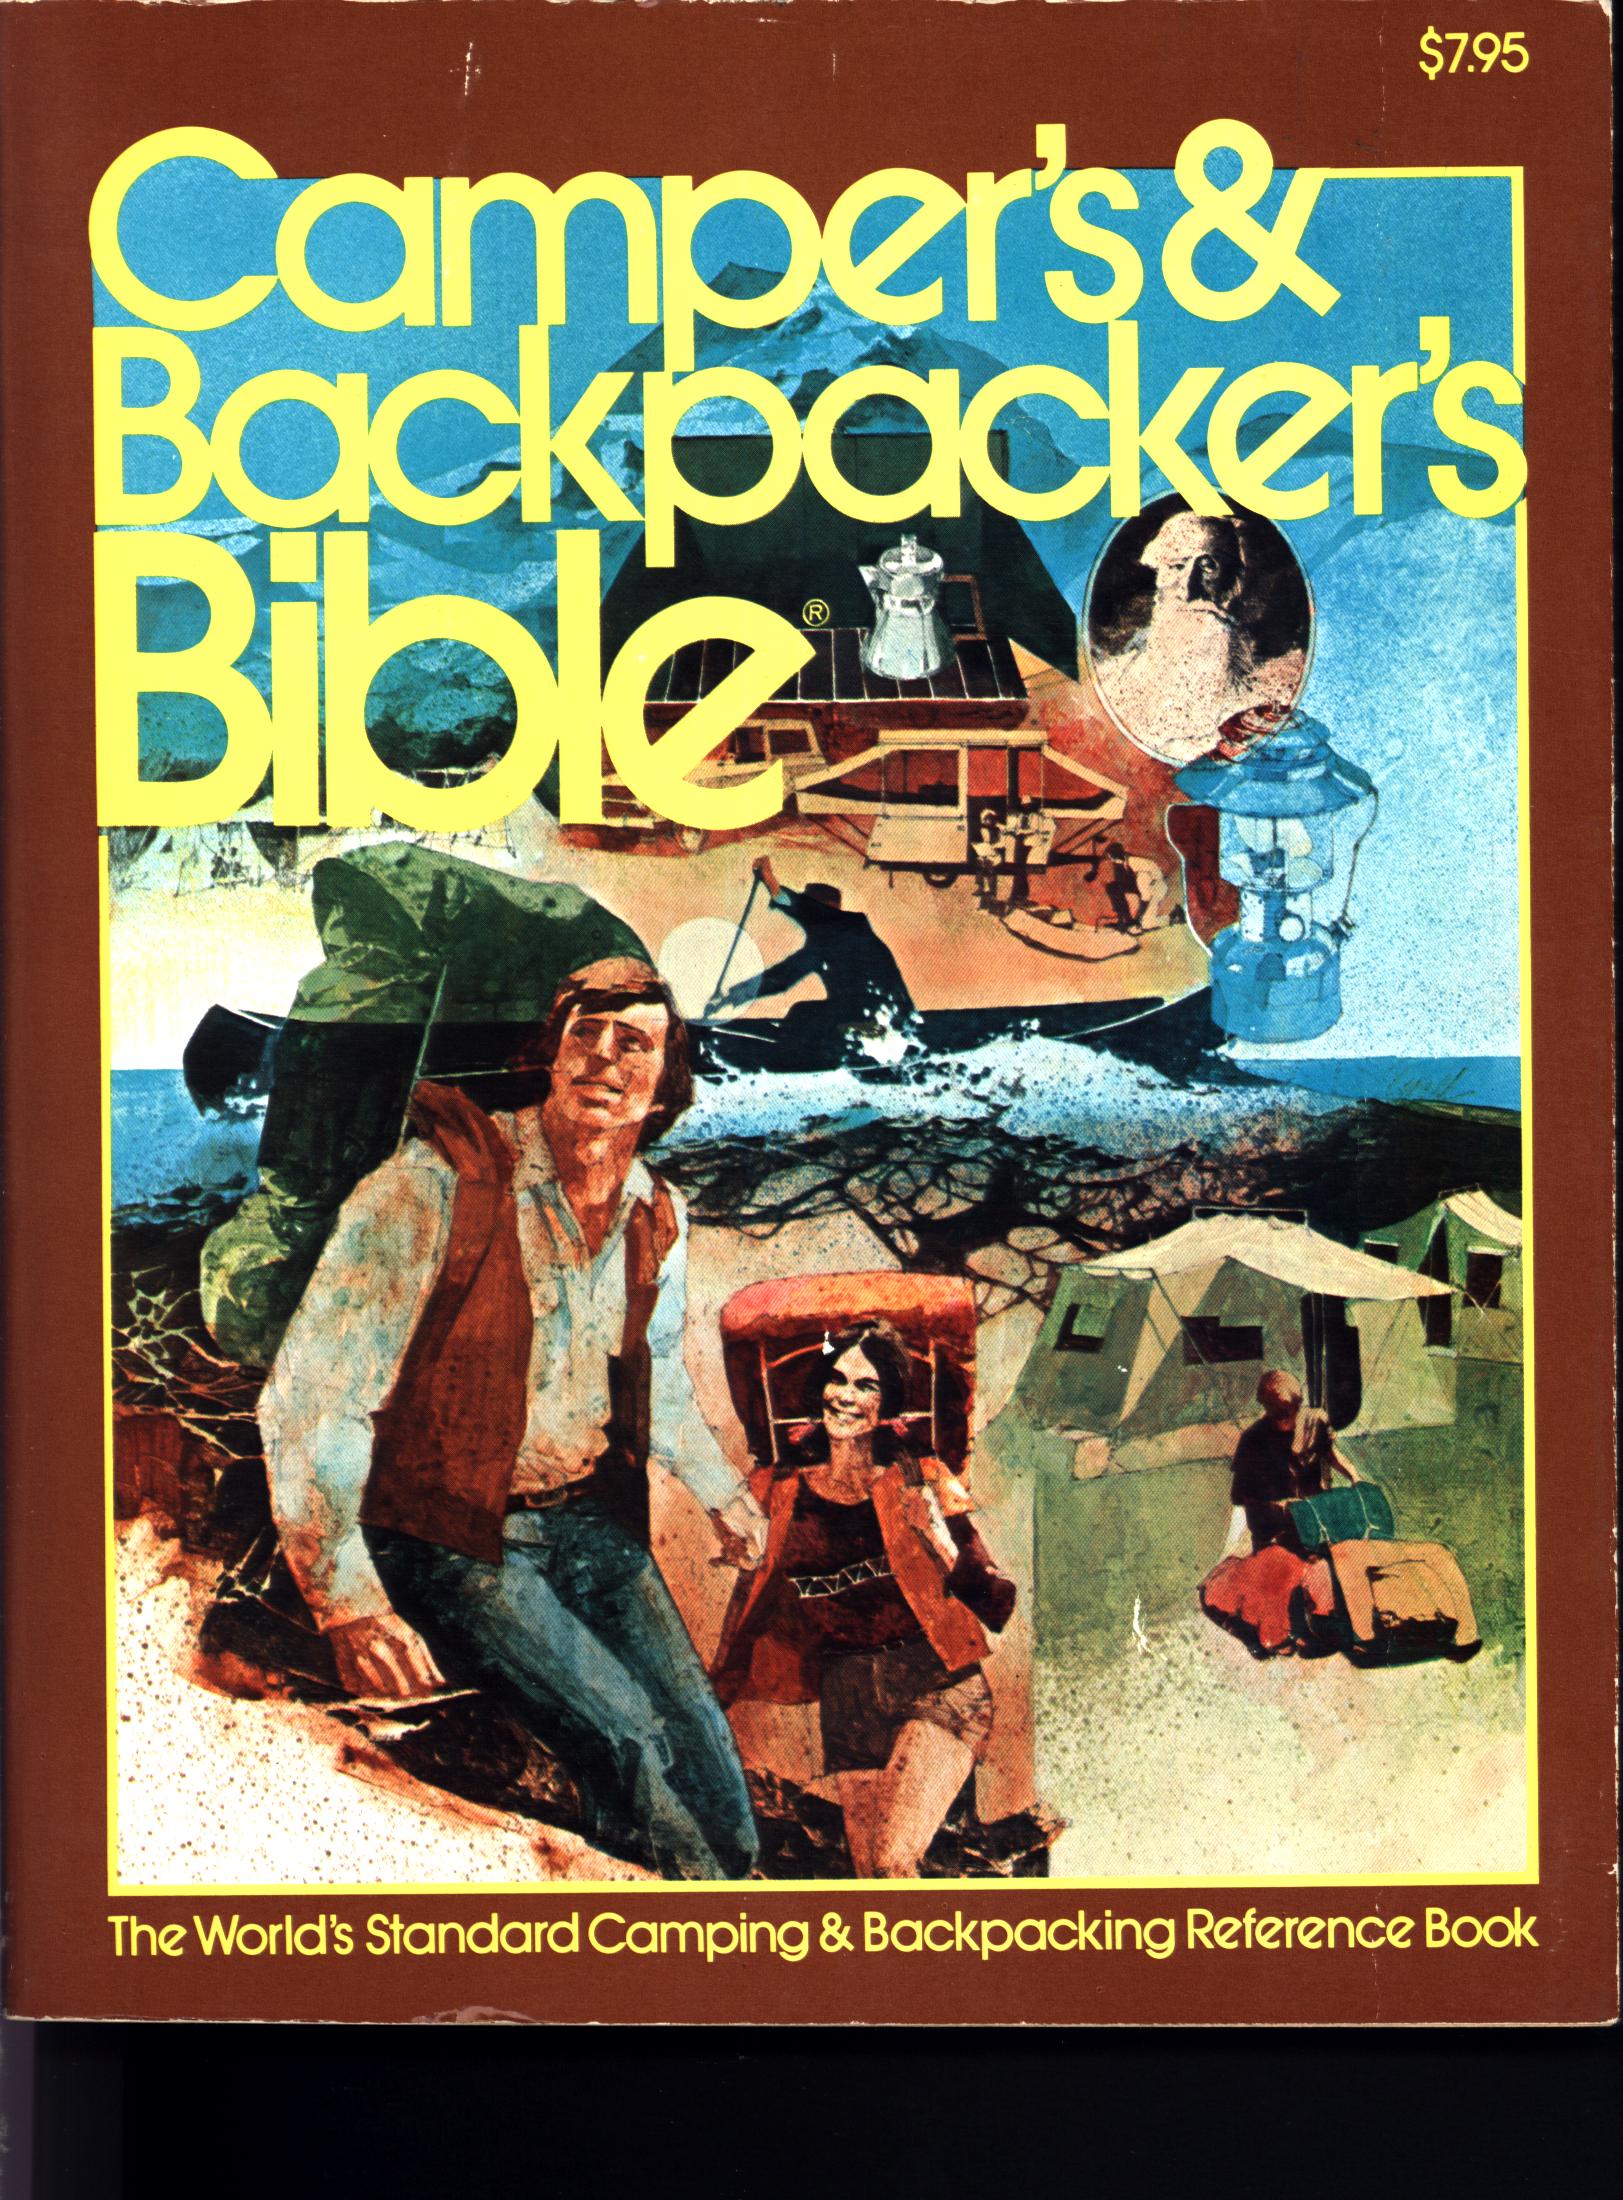 CAMPER'S & BACKPACKER'S BIBLE.